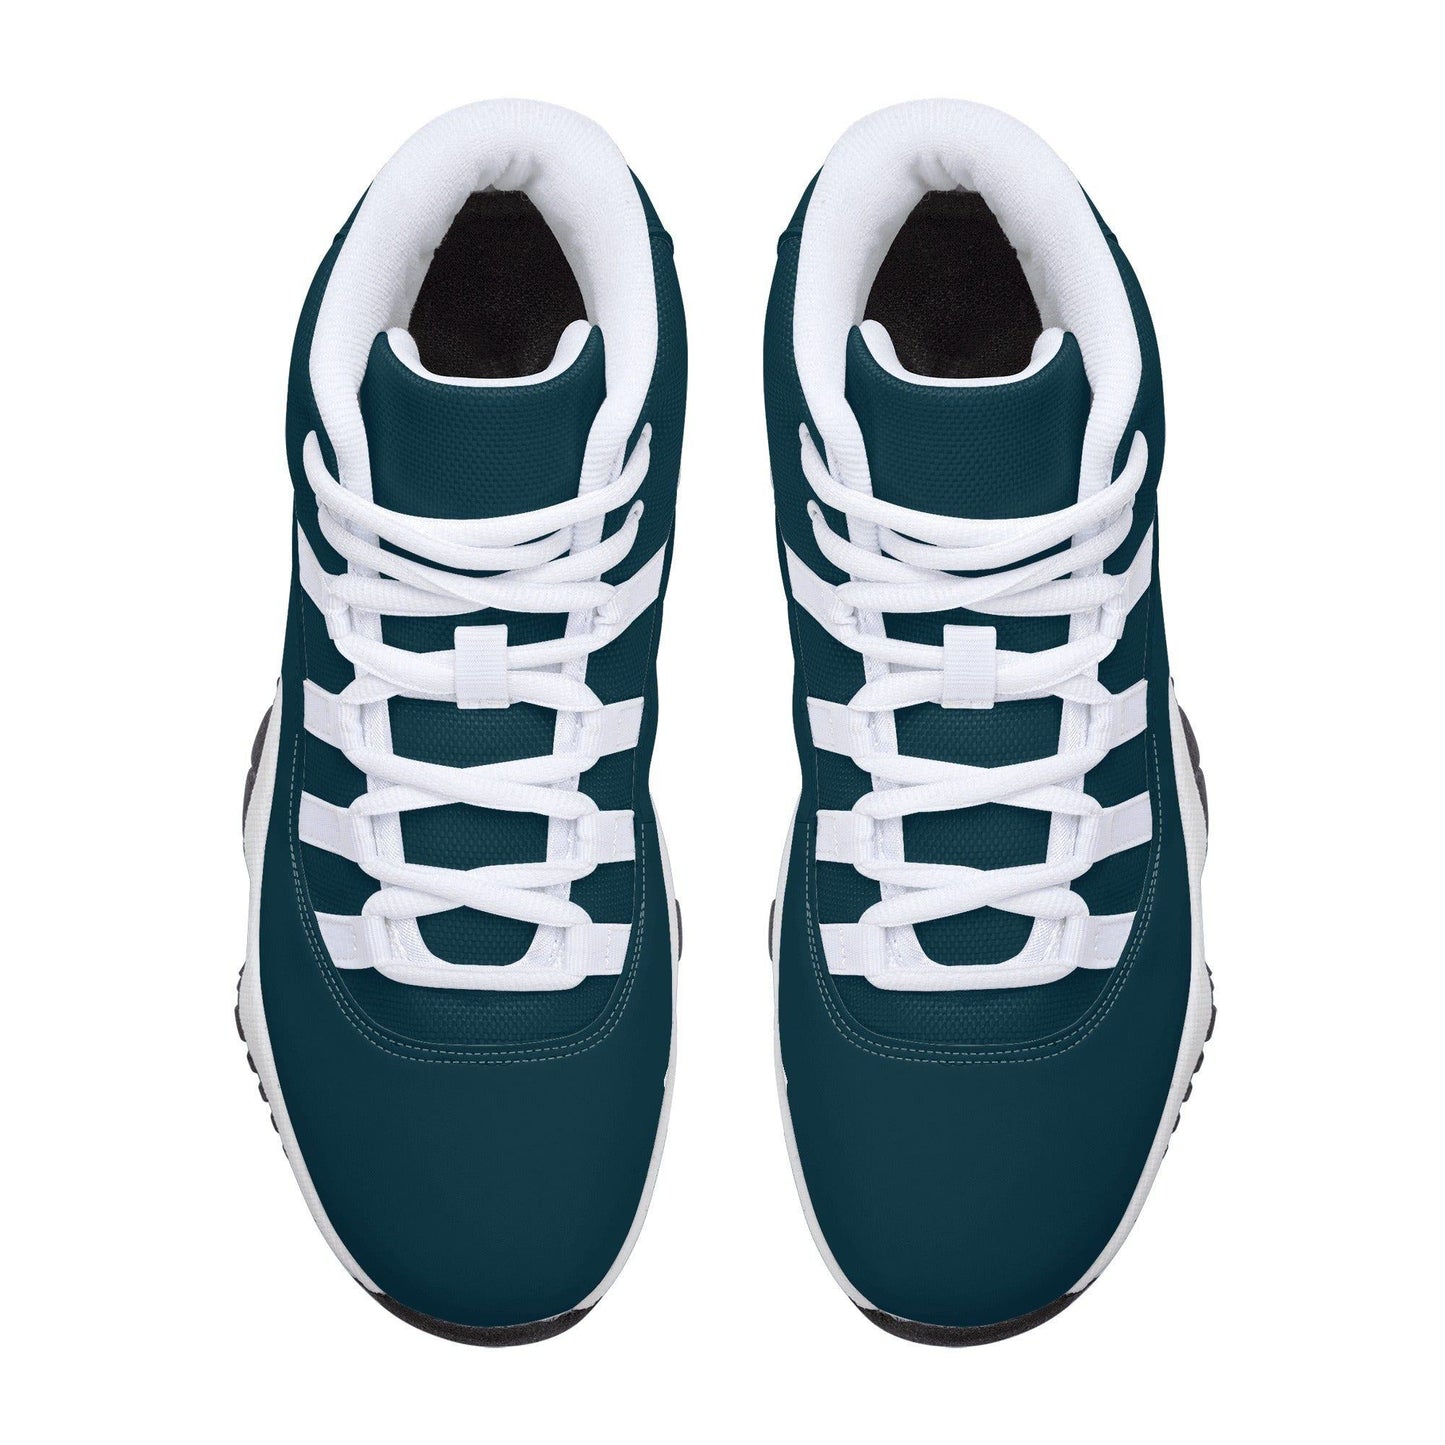 Blauwal High Top Damen Sneaker -- Blauwal High Top Damen Sneaker - undefined Sneaker | JLR Design